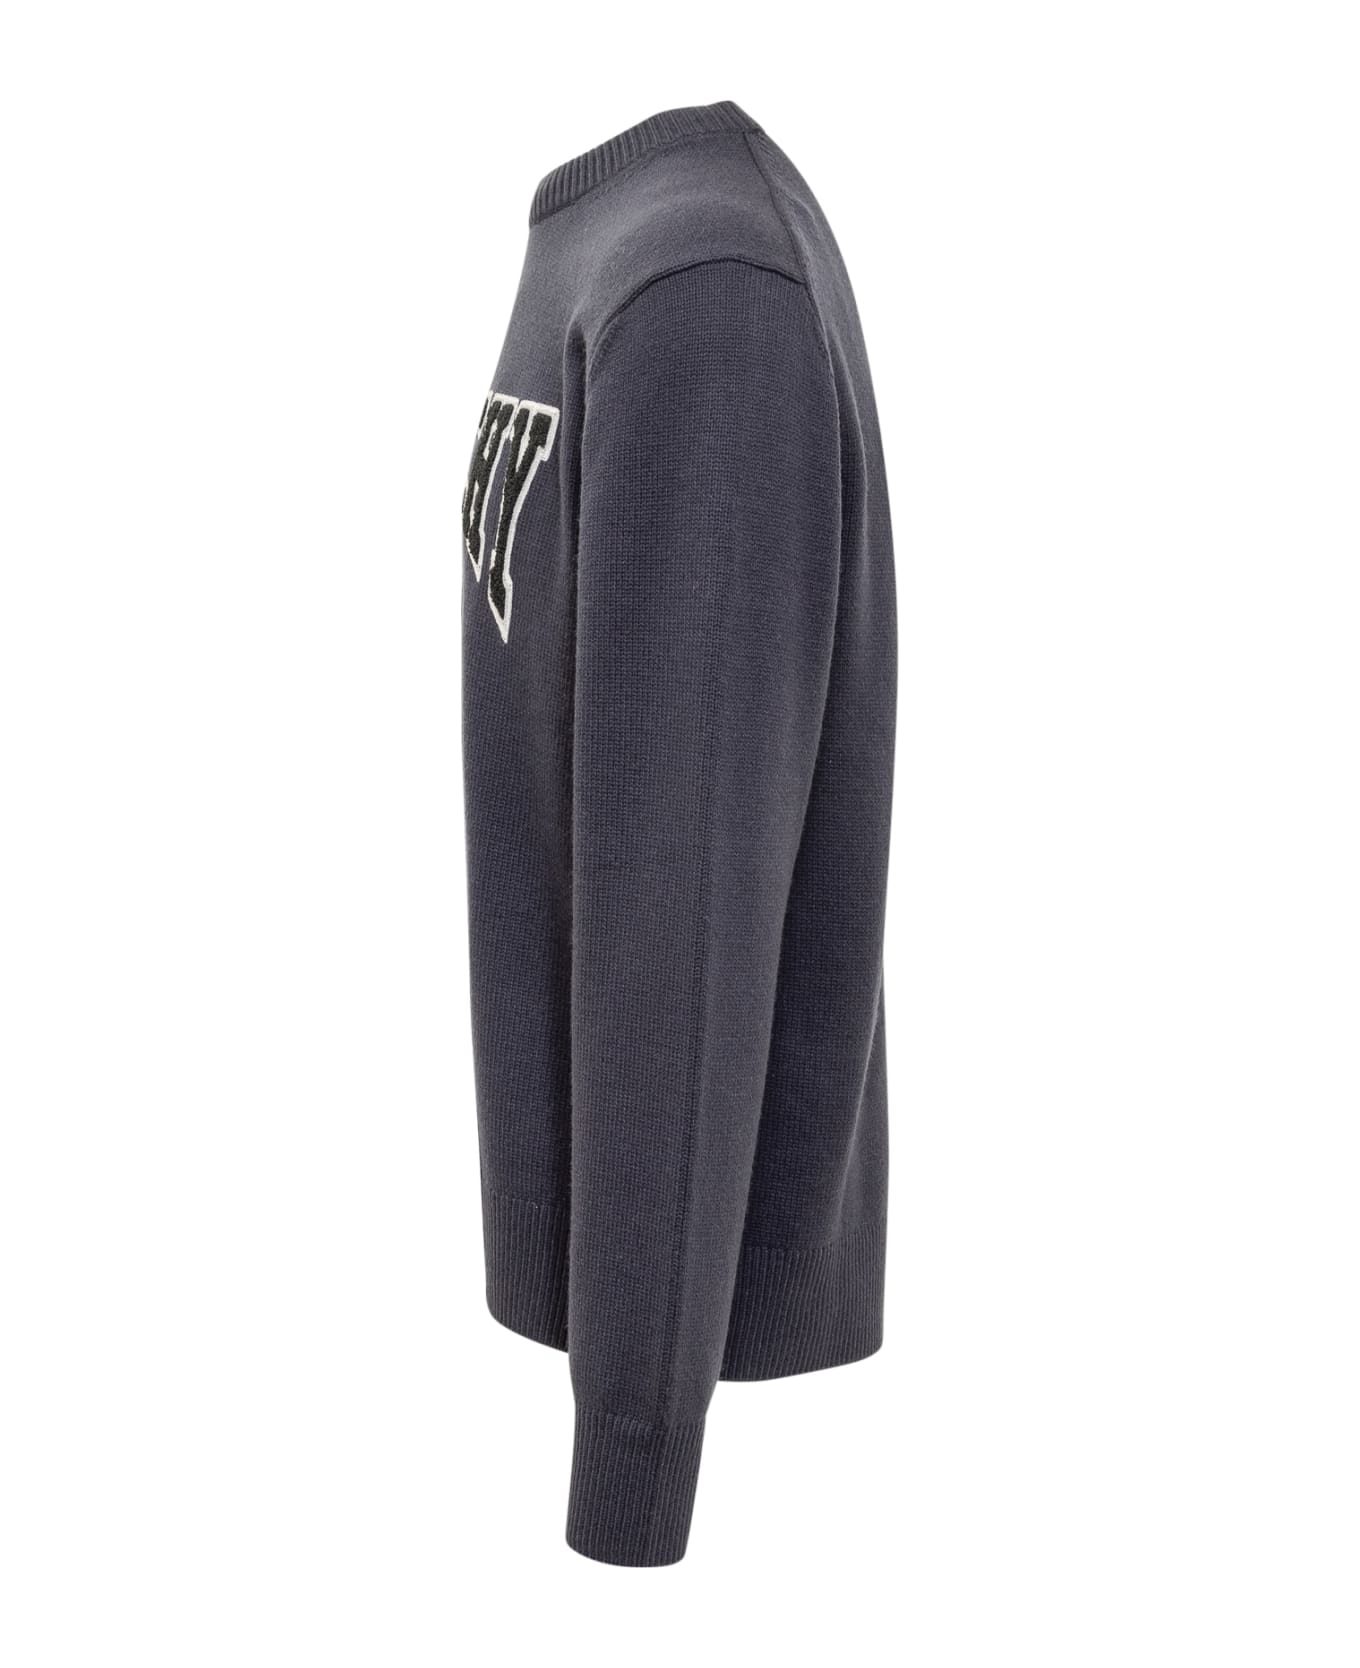 Givenchy Sweater With Logo - DARK NAVY フリース